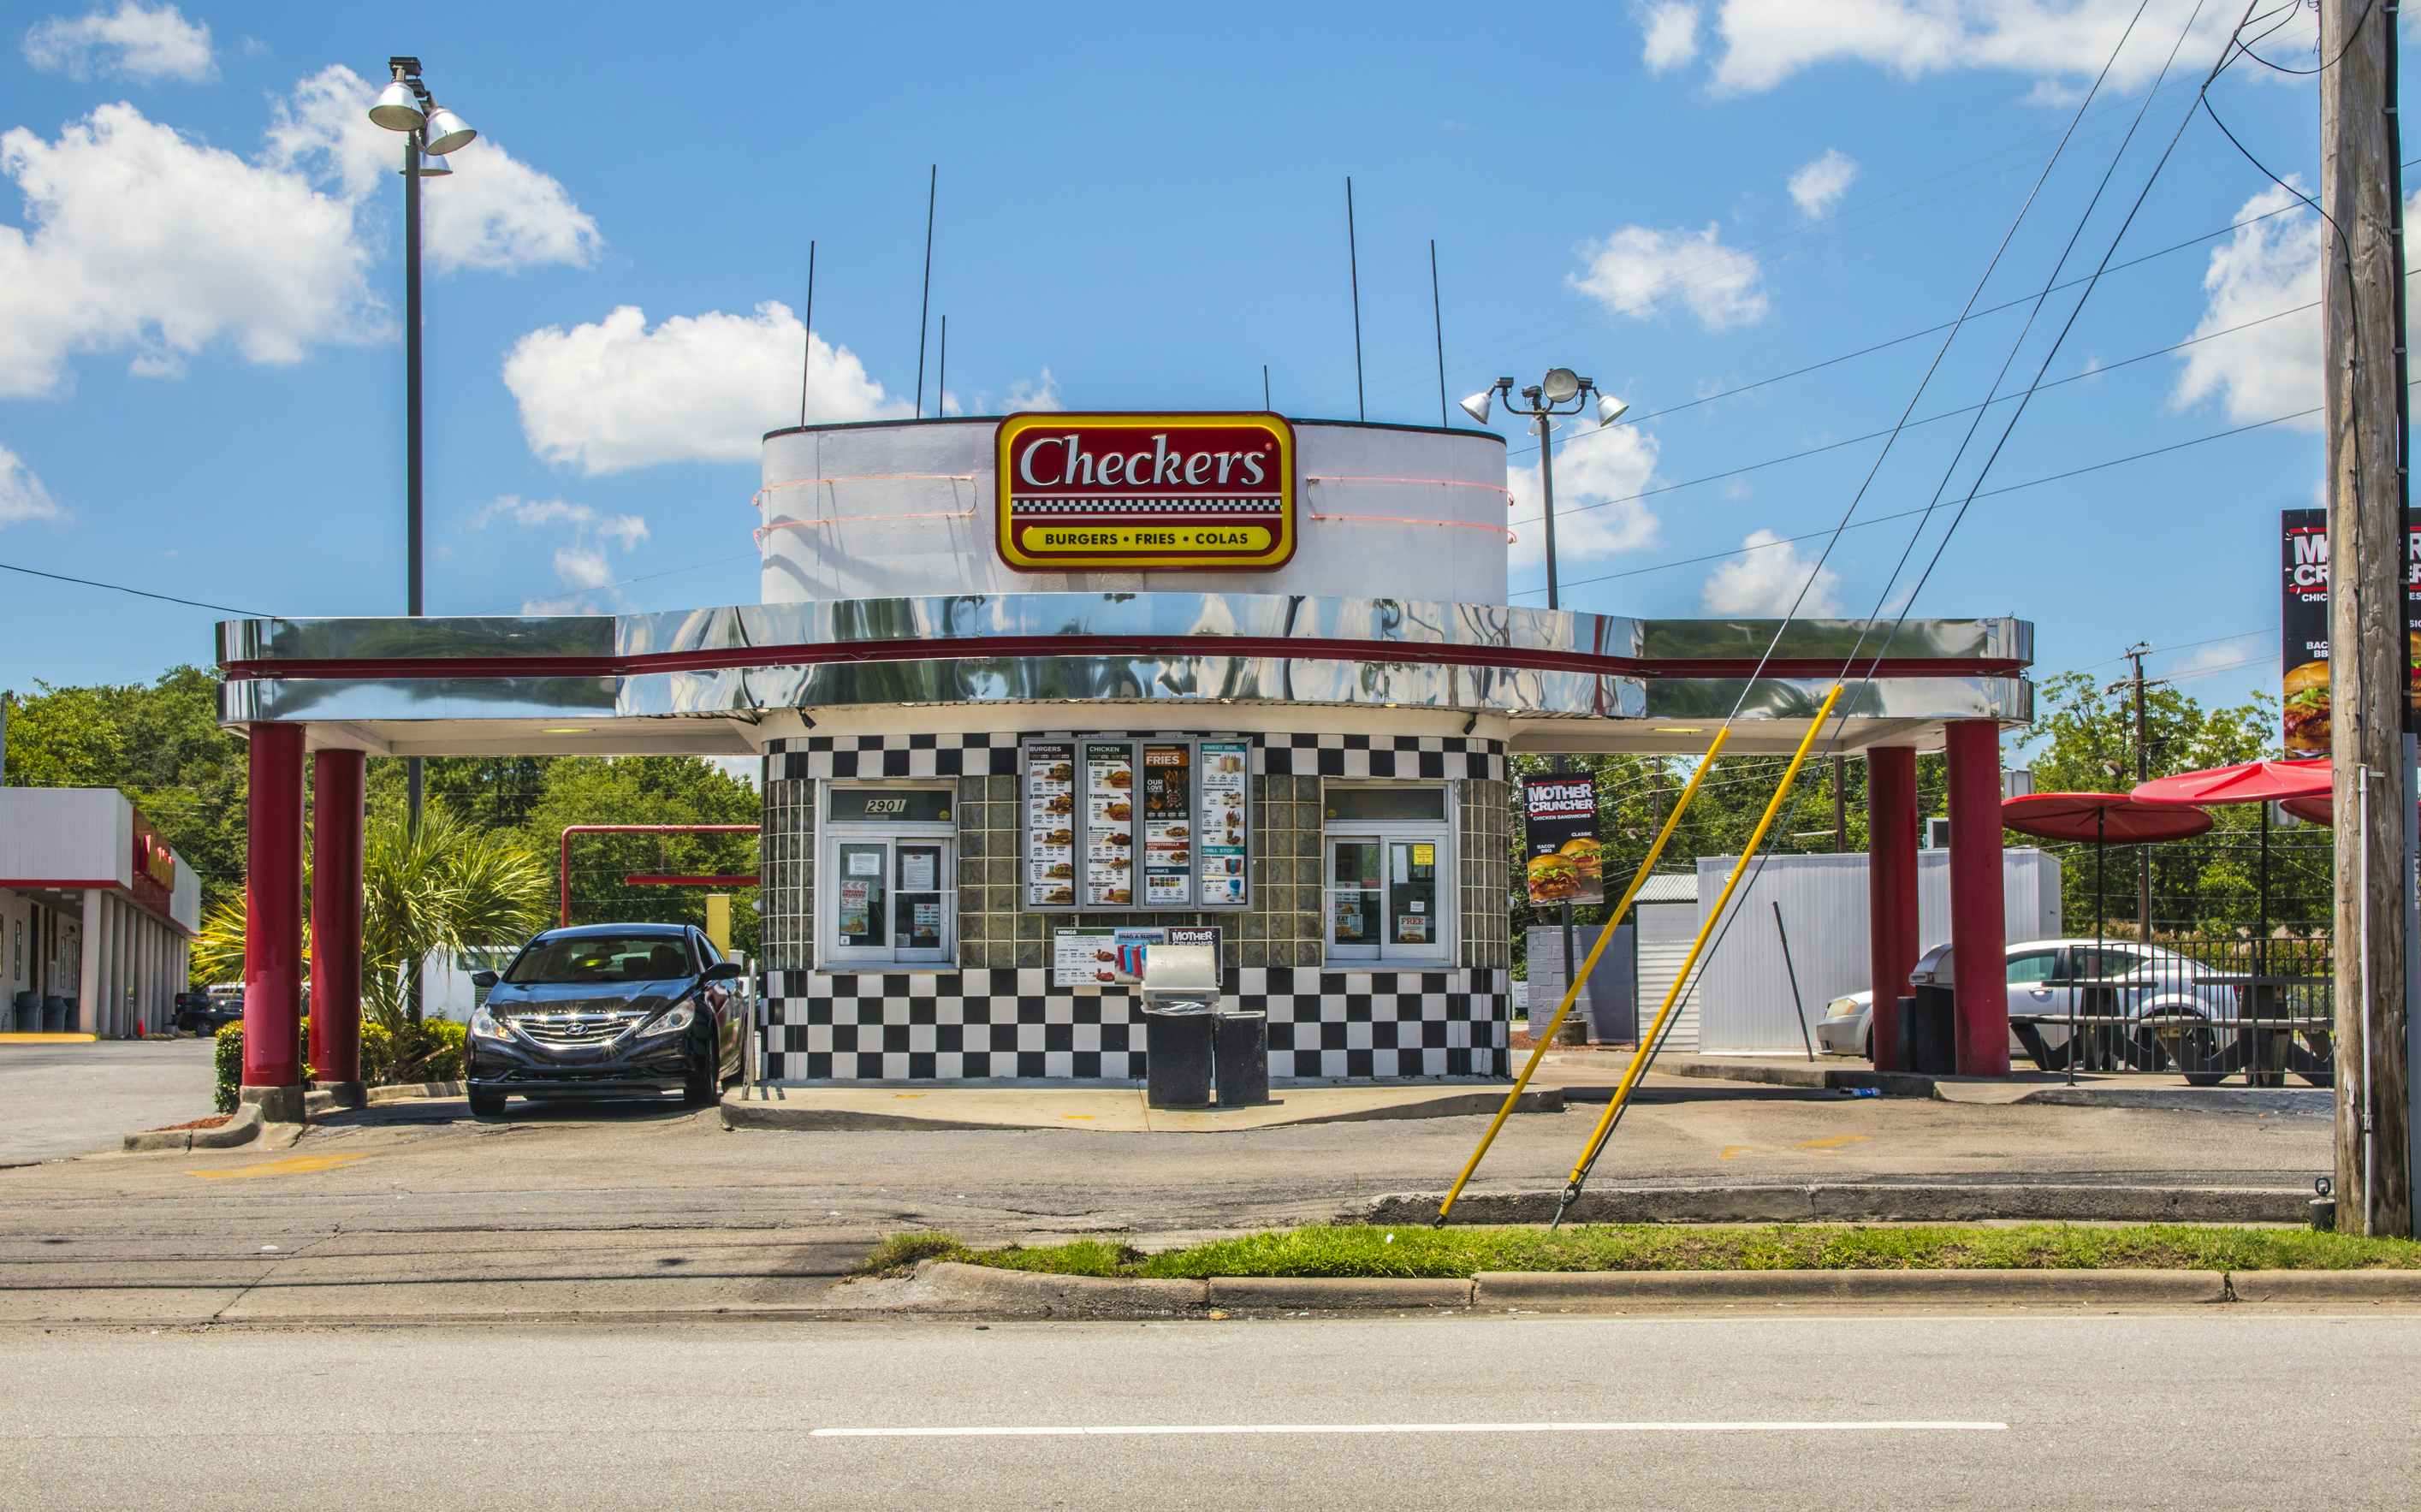 Checkers fast food restaurant drive-thru